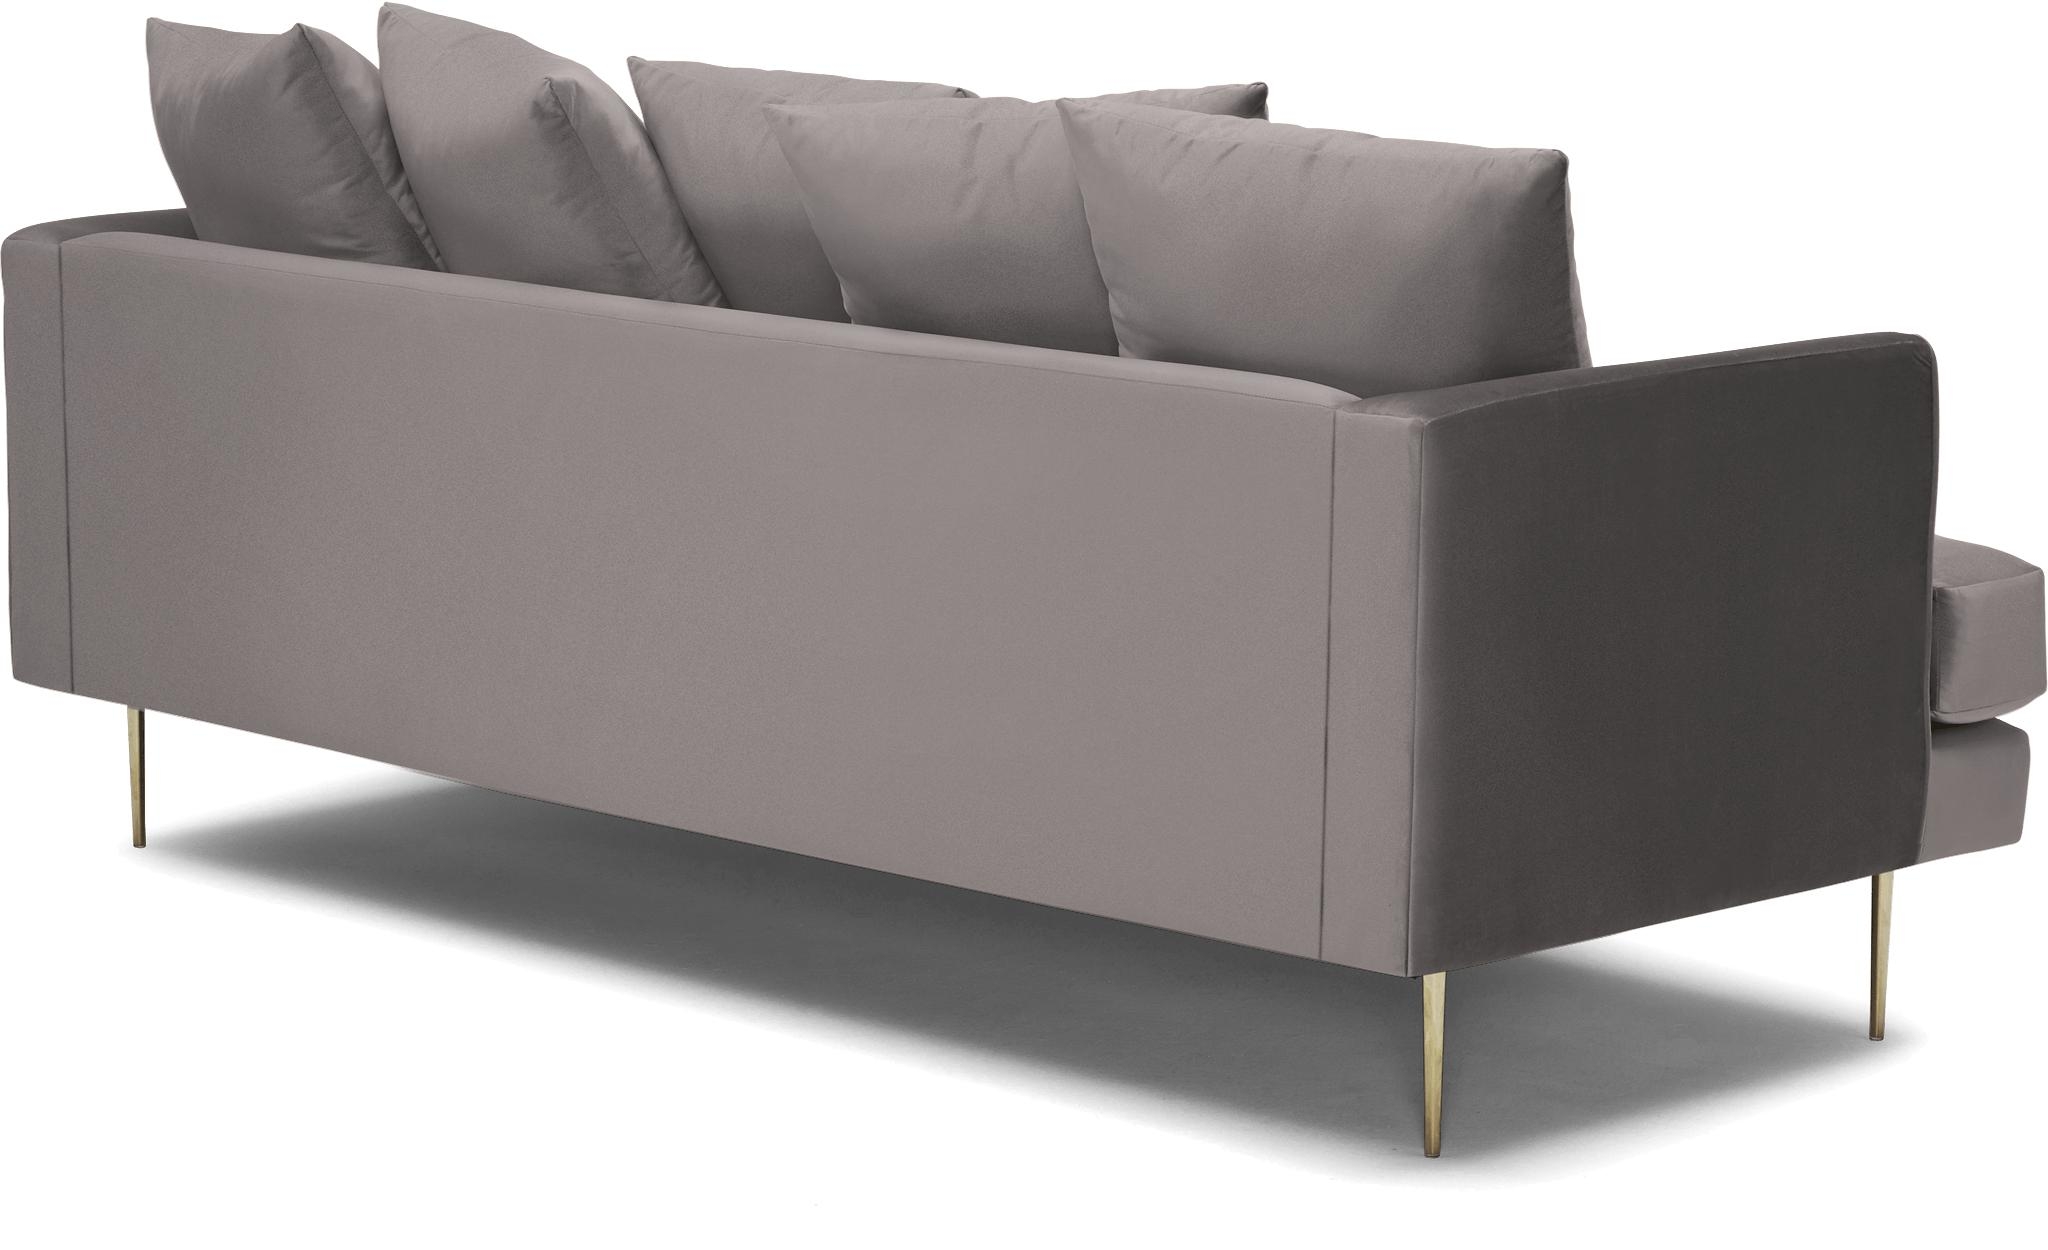 Purple Aime Mid Century Modern Sofa - Sunbrella Premier Wisteria - Image 3